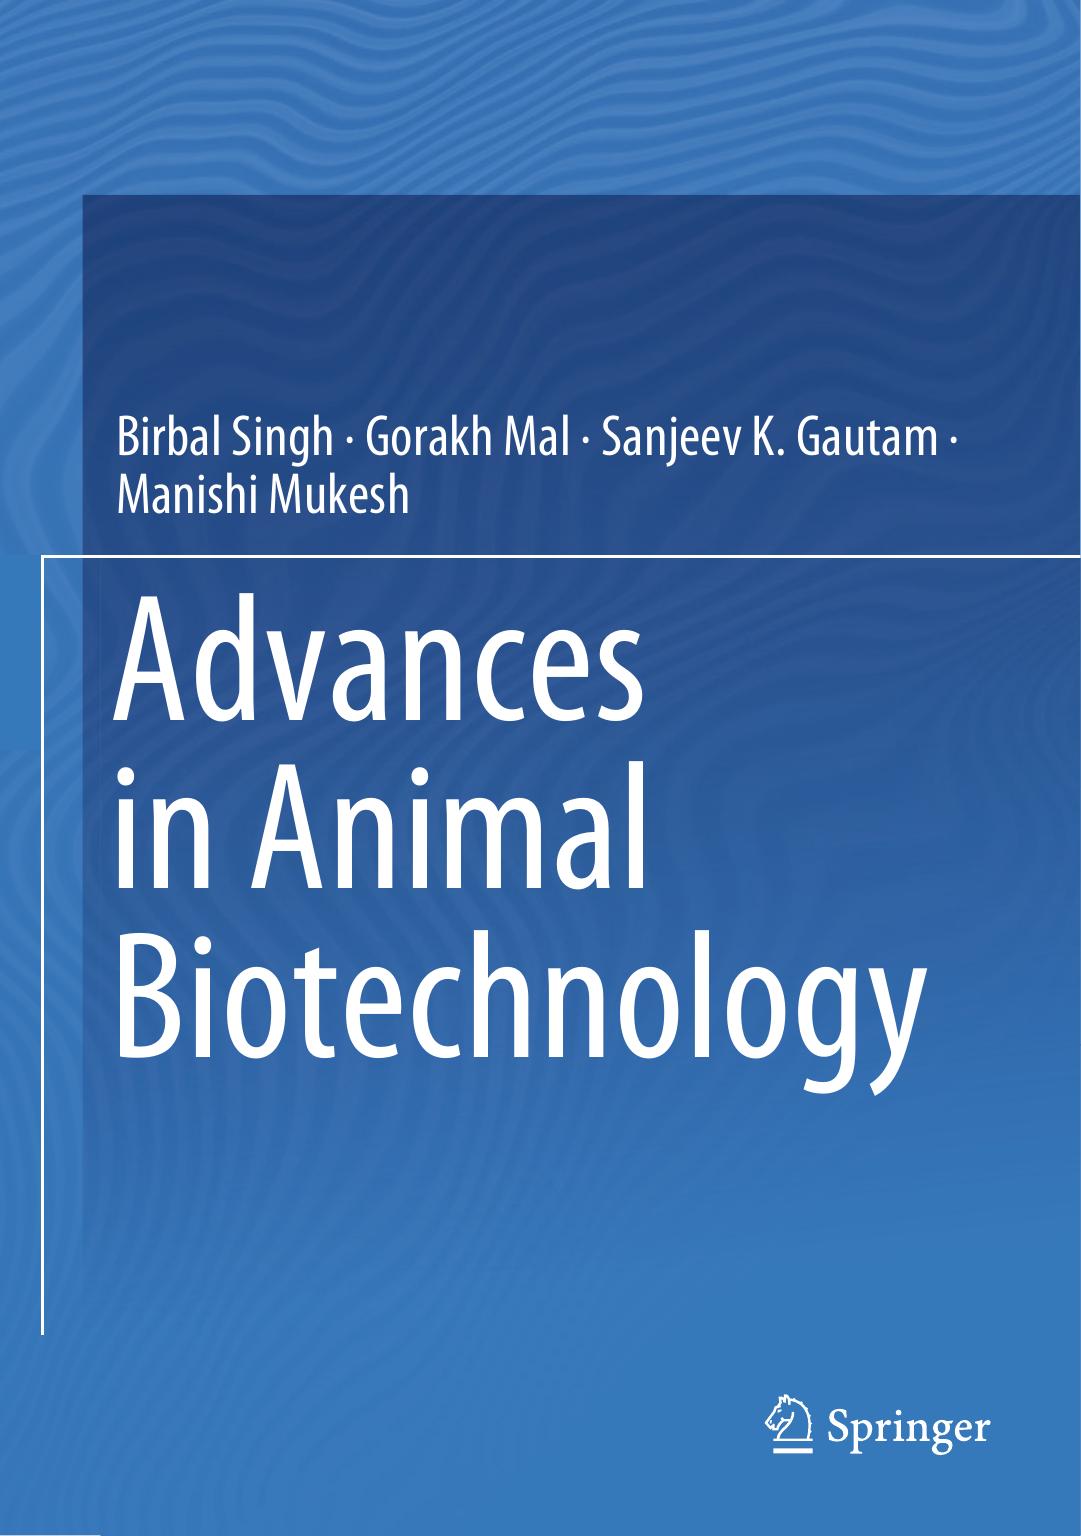 Advances in Animal Biotechnology 2019